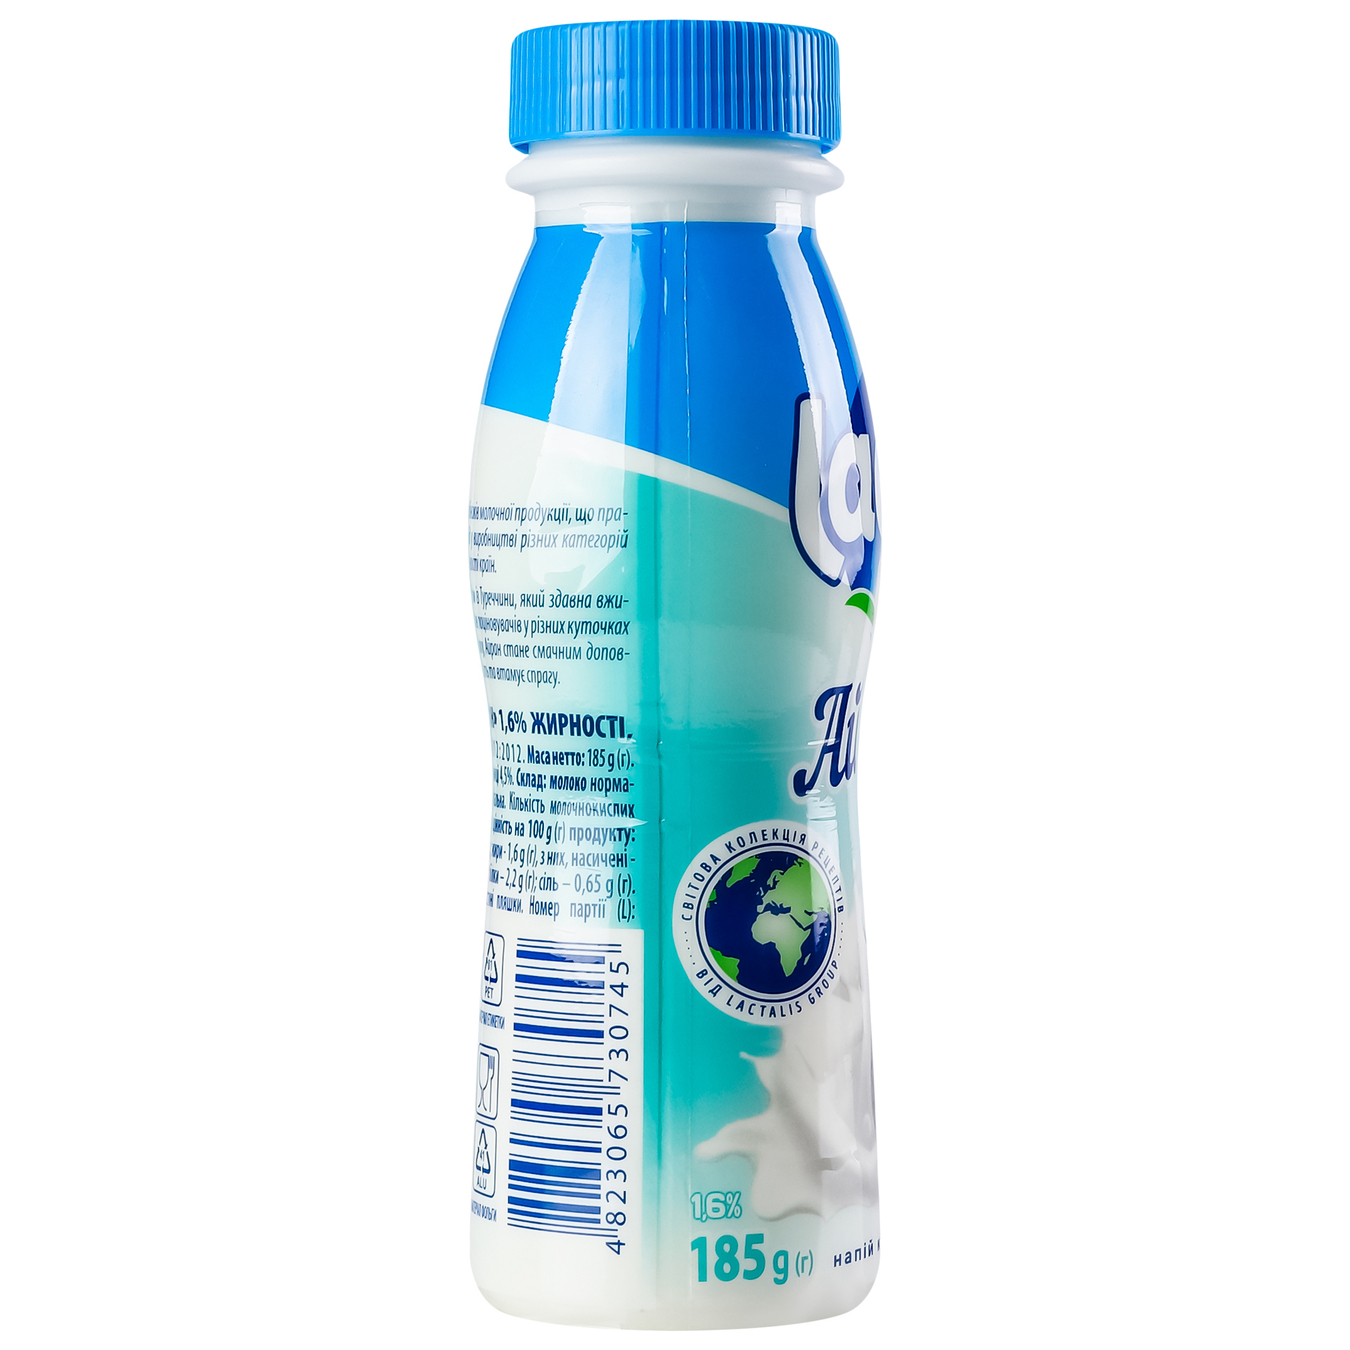 Fermented milk drink Lactel Ayran drinking bottle 1.6% 185g 6